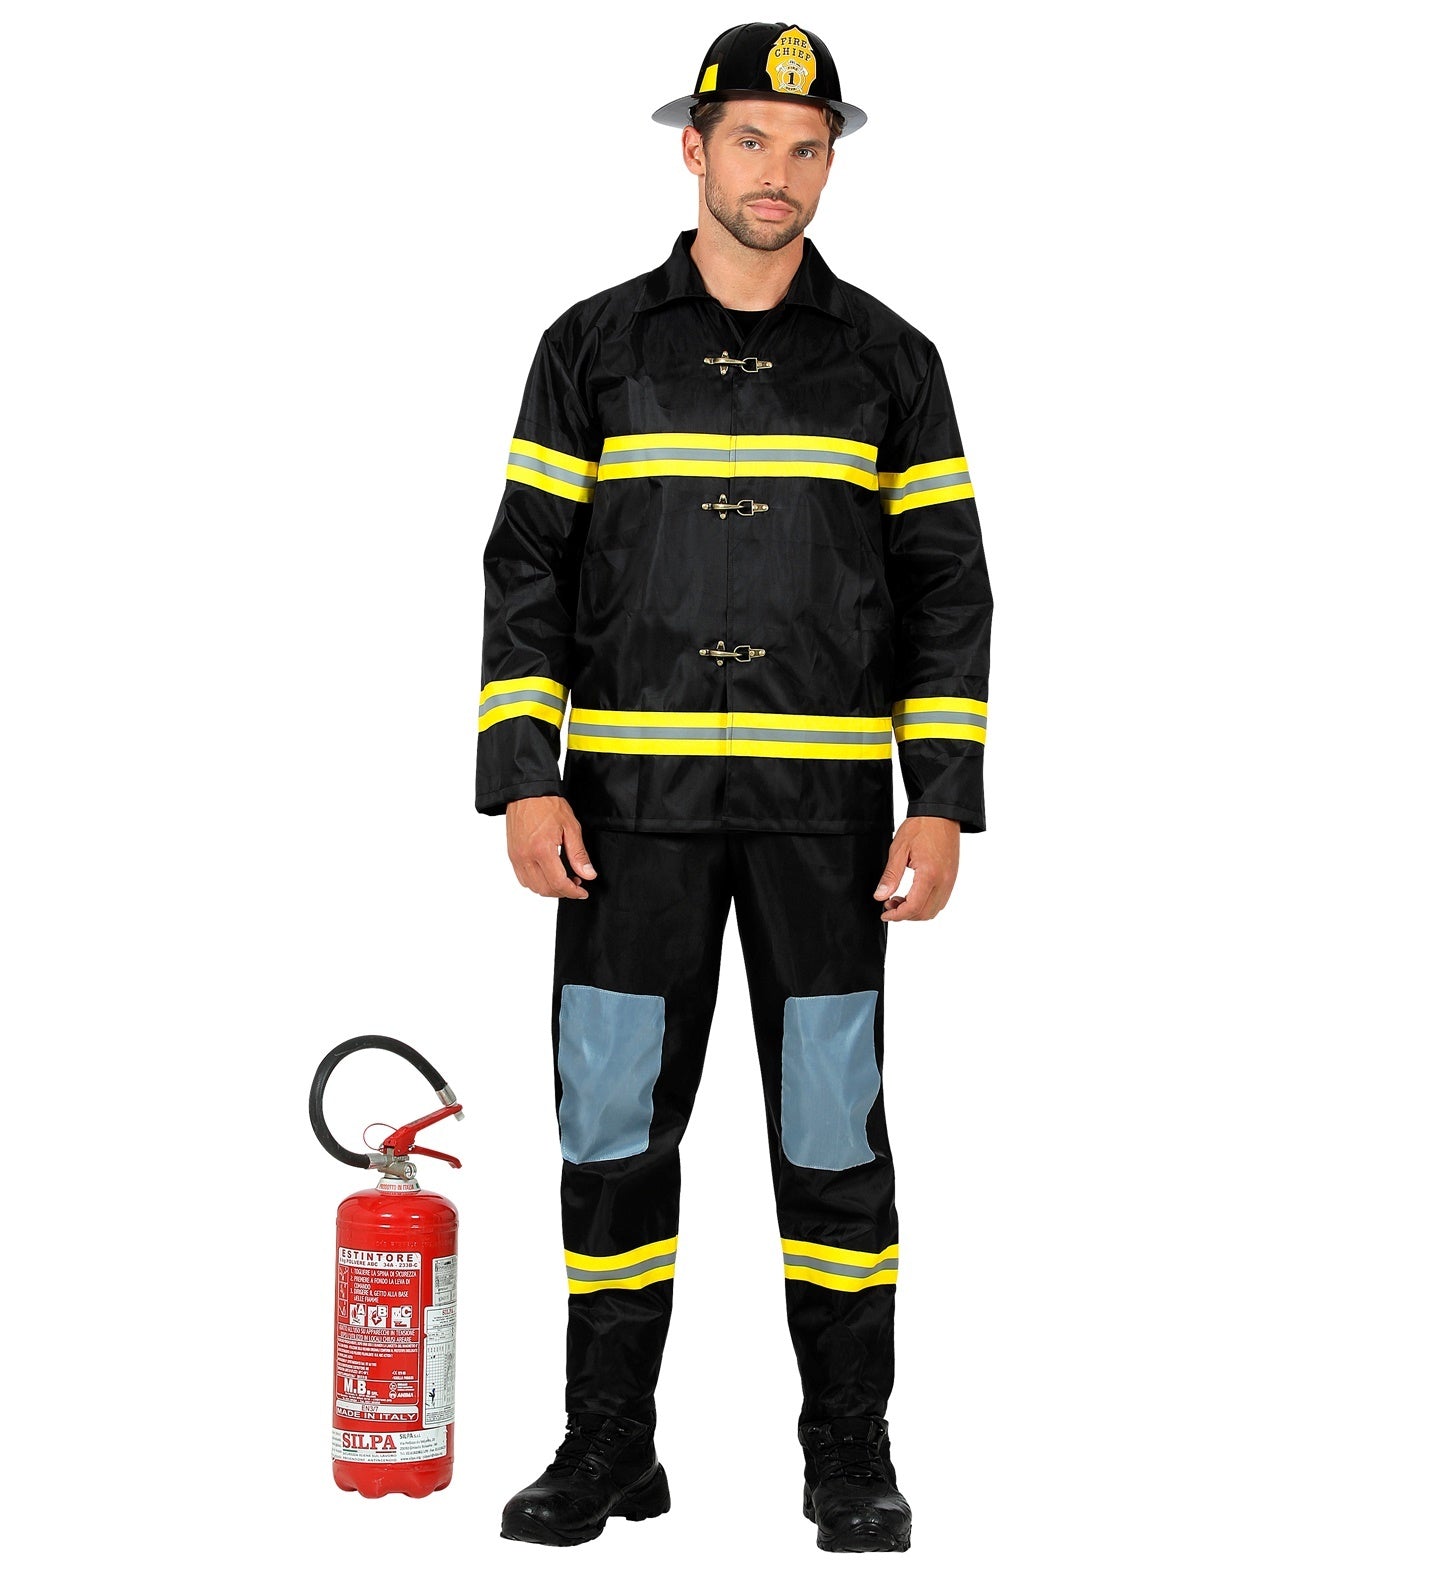 Widmann - Brandweer Kostuum - Vuurbestrijdende Levensredder Brandweerman Kostuum - geel,zwart - XXL - Carnavalskleding - Verkleedkleding